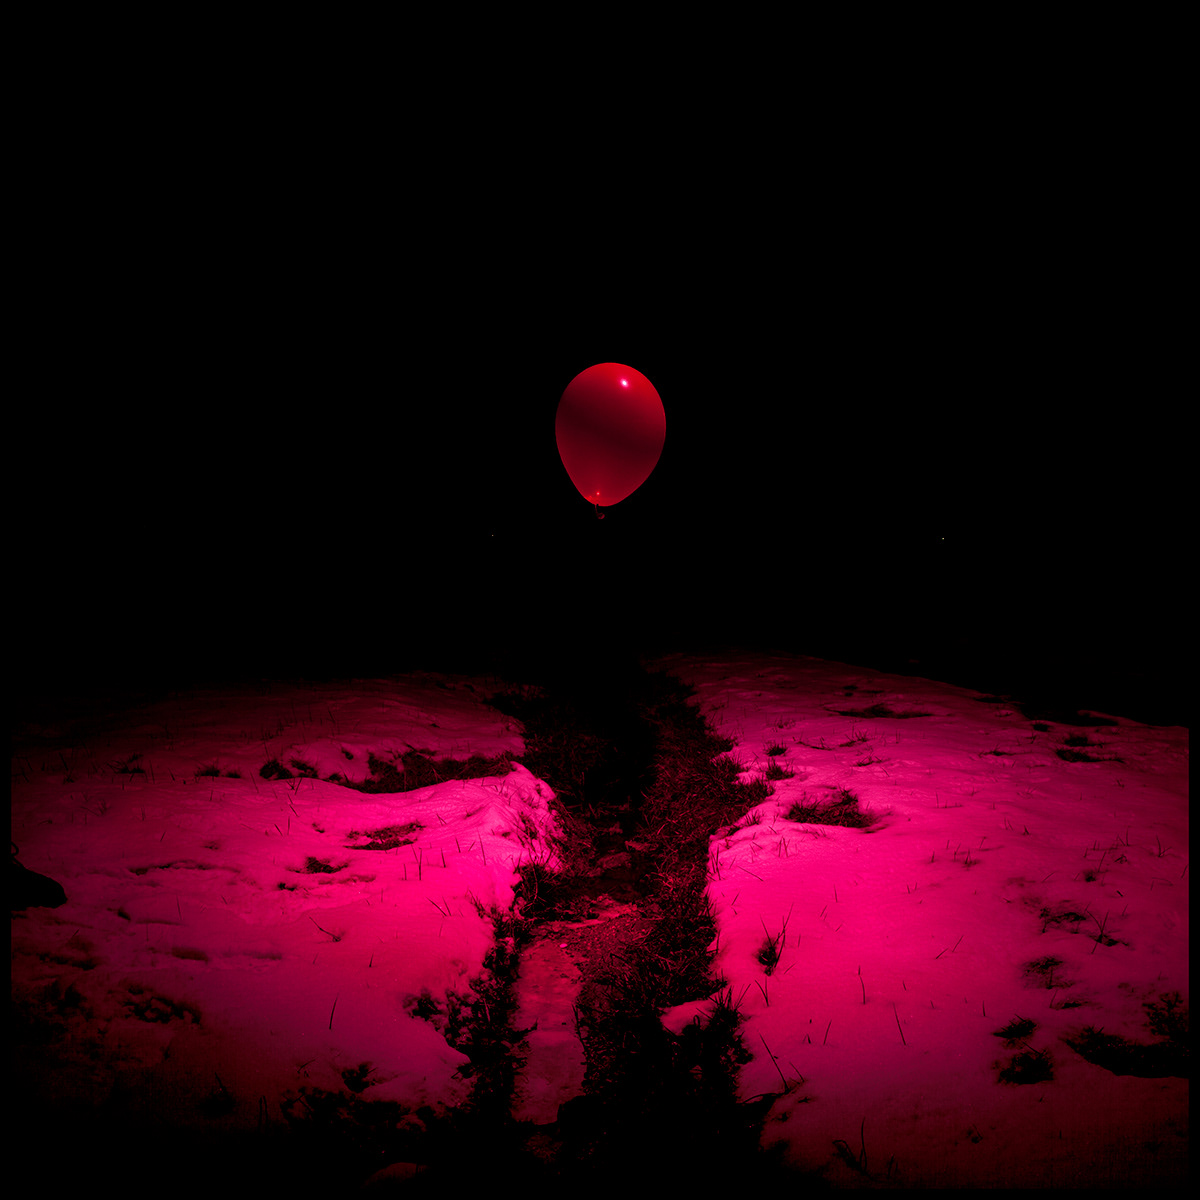 Roland Barthes snow red light ballon colors Landscape selfportrait night black